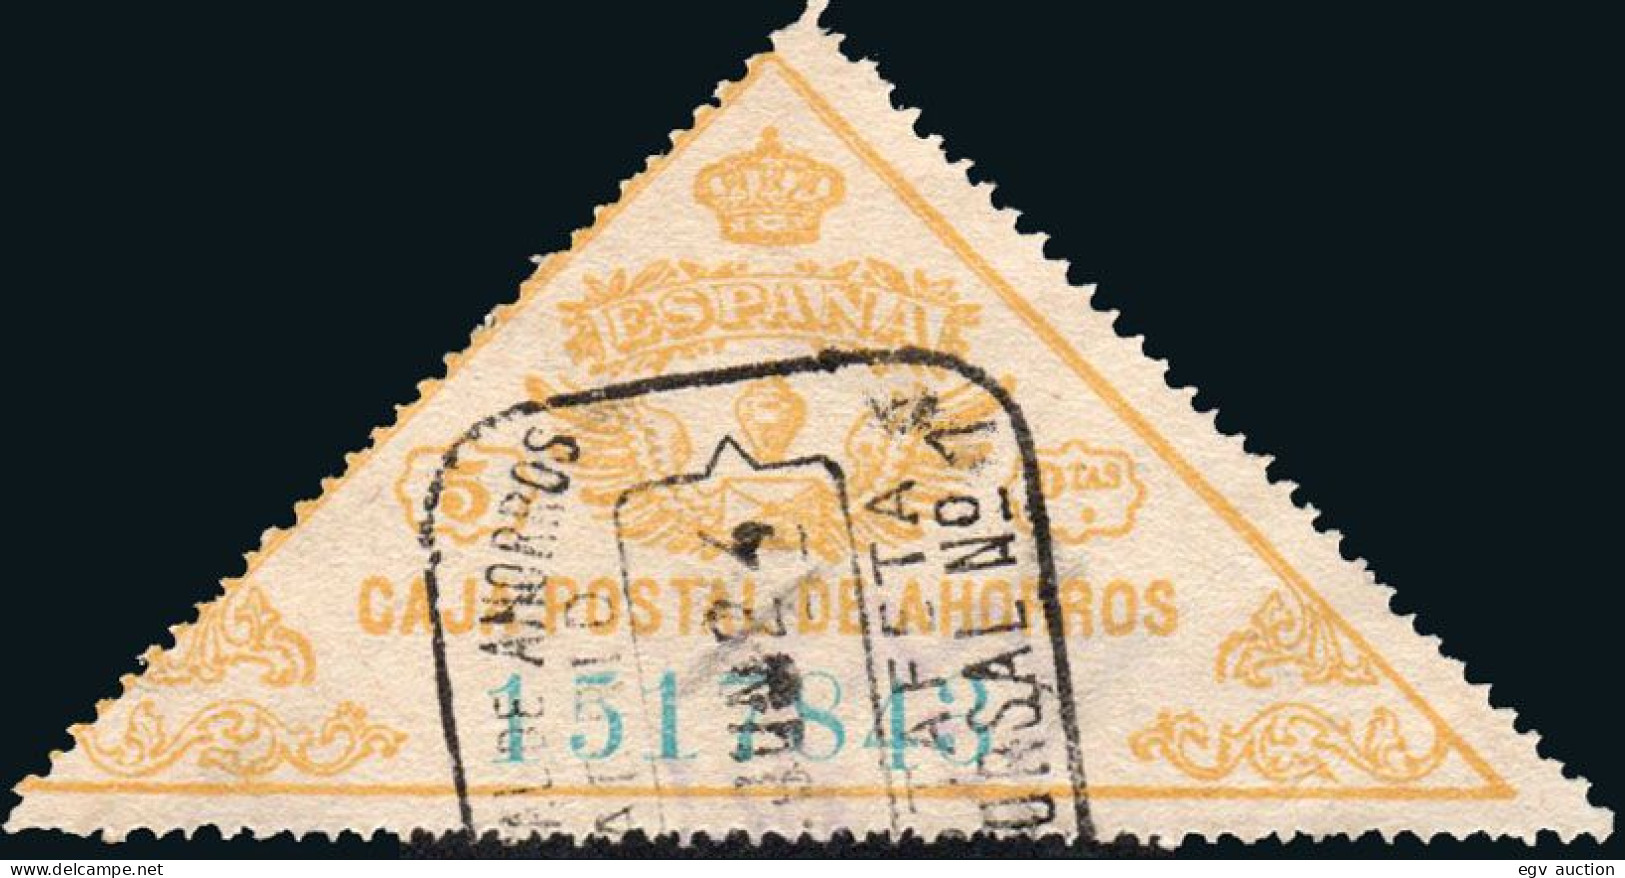 Madrid - Caja Postal Ahorros - Gálvez O 5 - Mat "Estafeta Sucursal N.º 1 - Caja Postal Ahorros" - Revenue Stamps